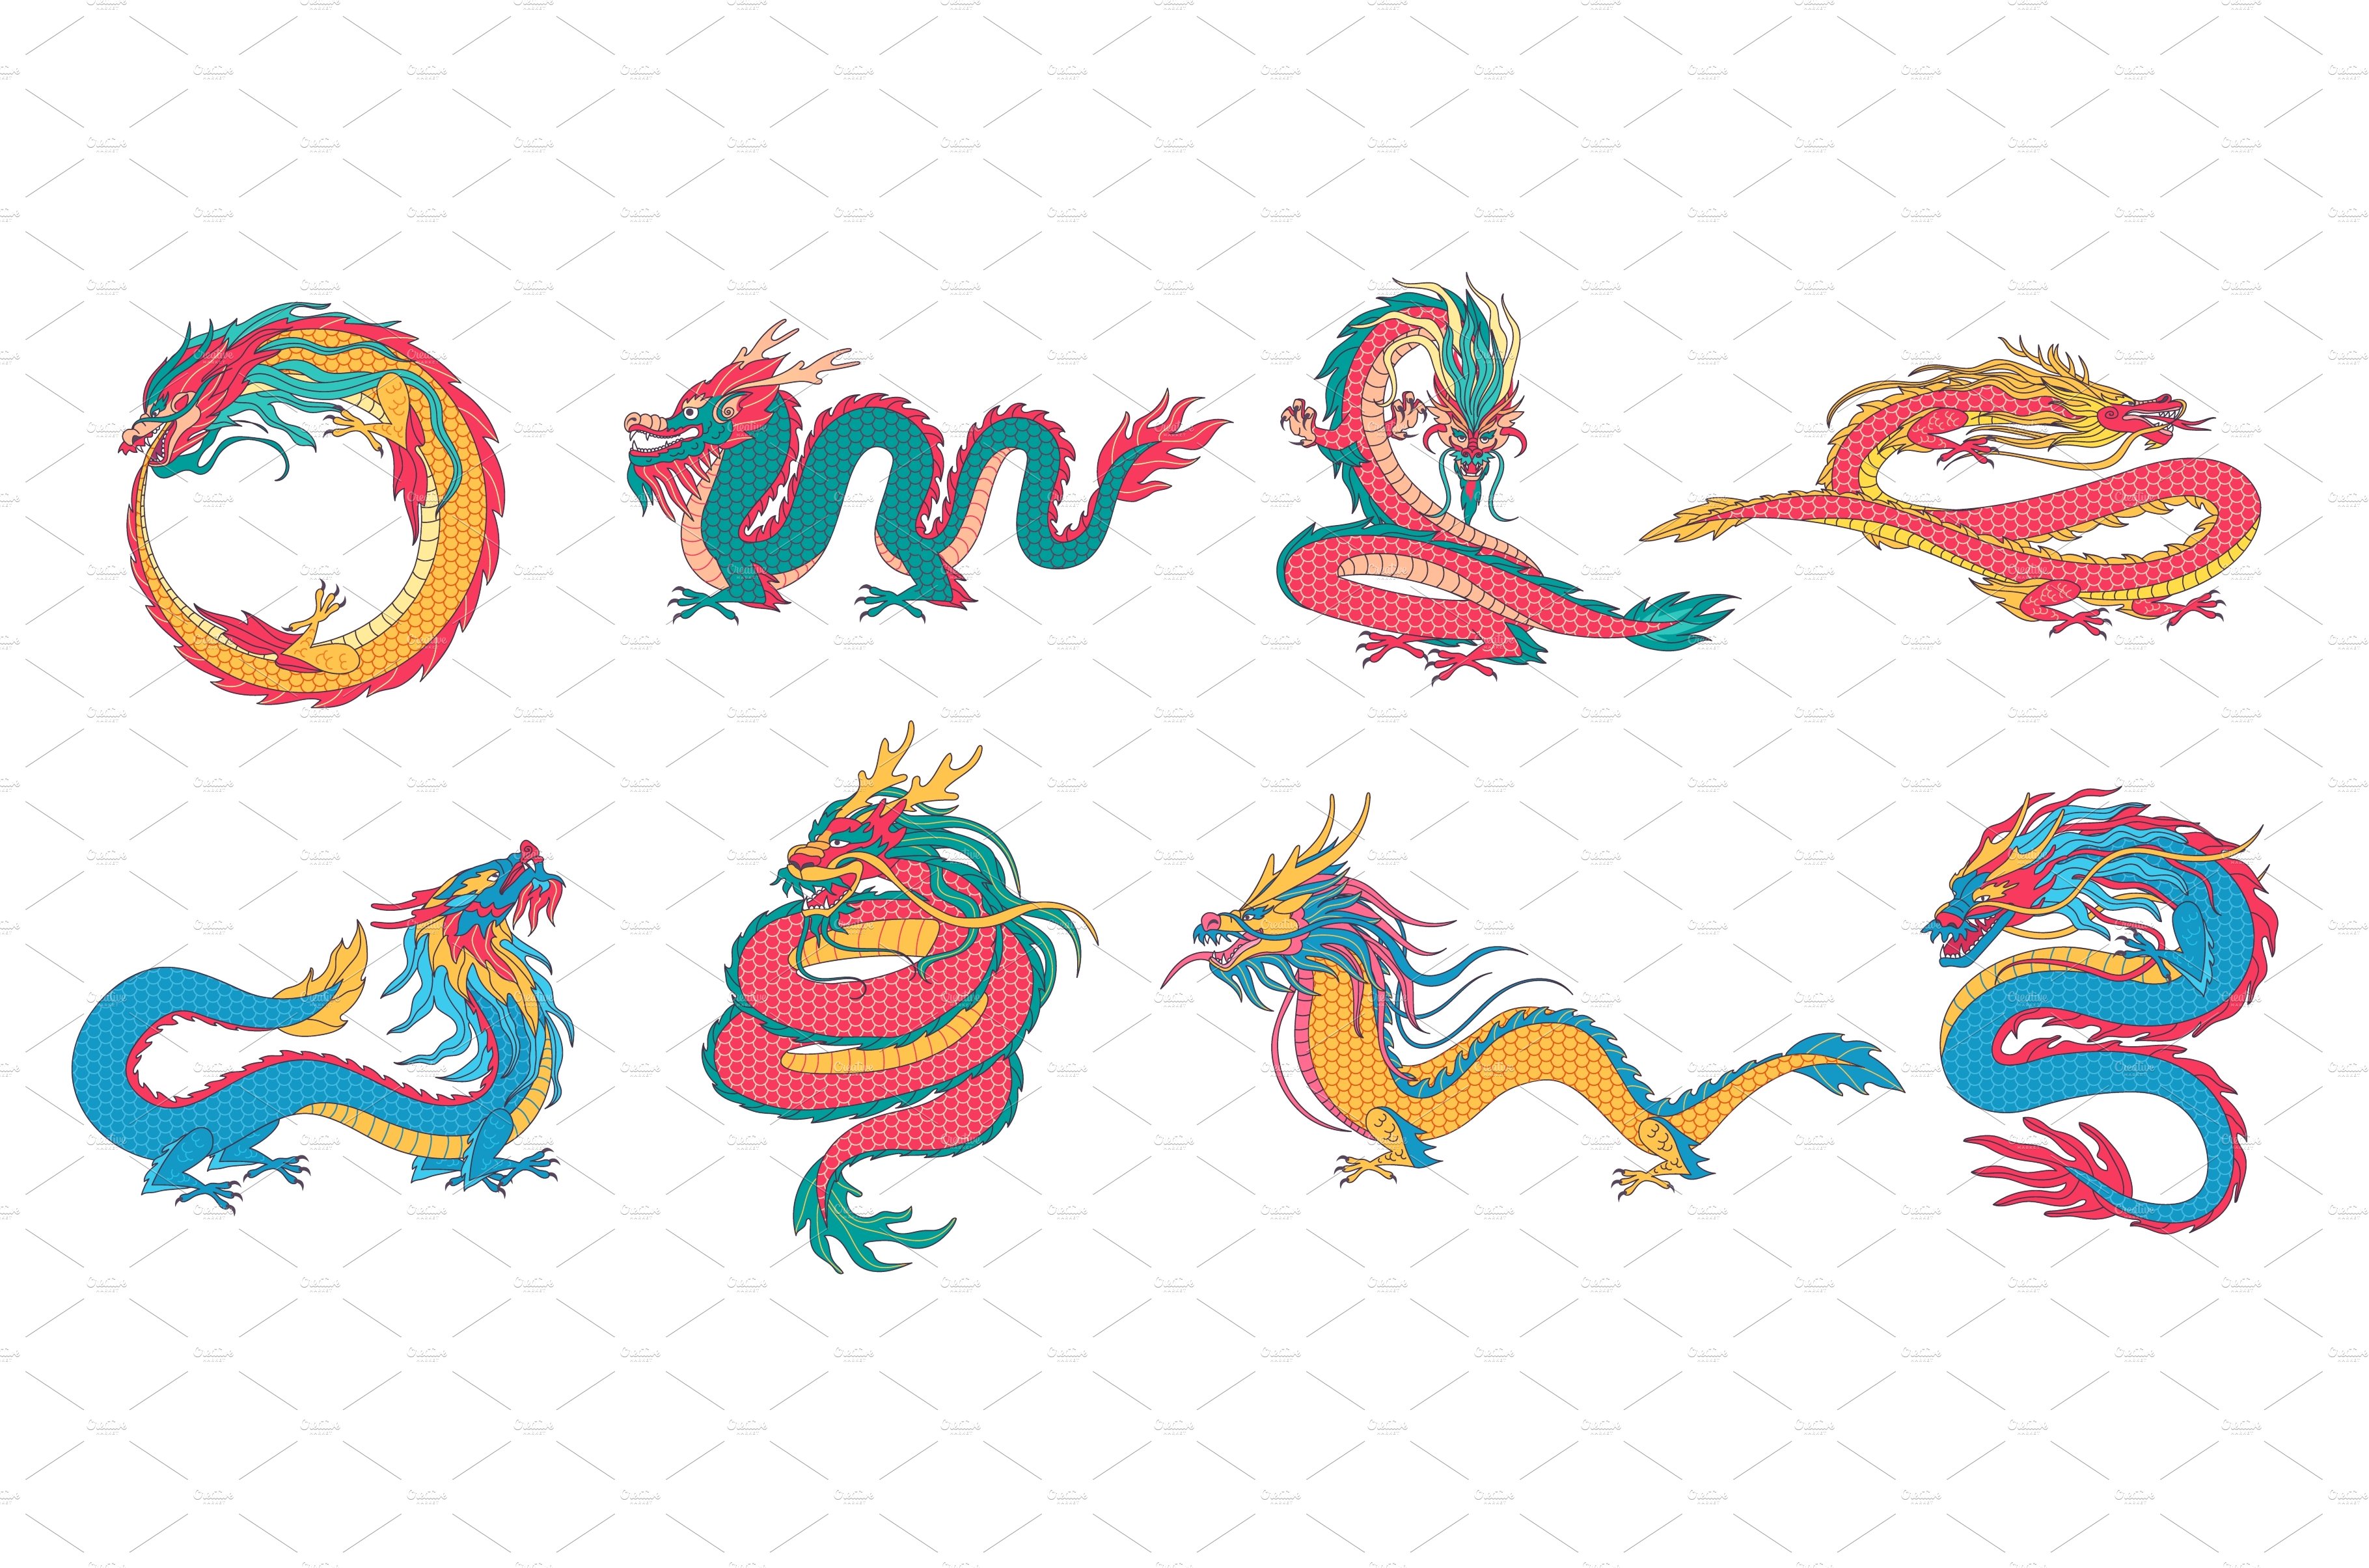 Asian dragons. Chinese mythological cover image.